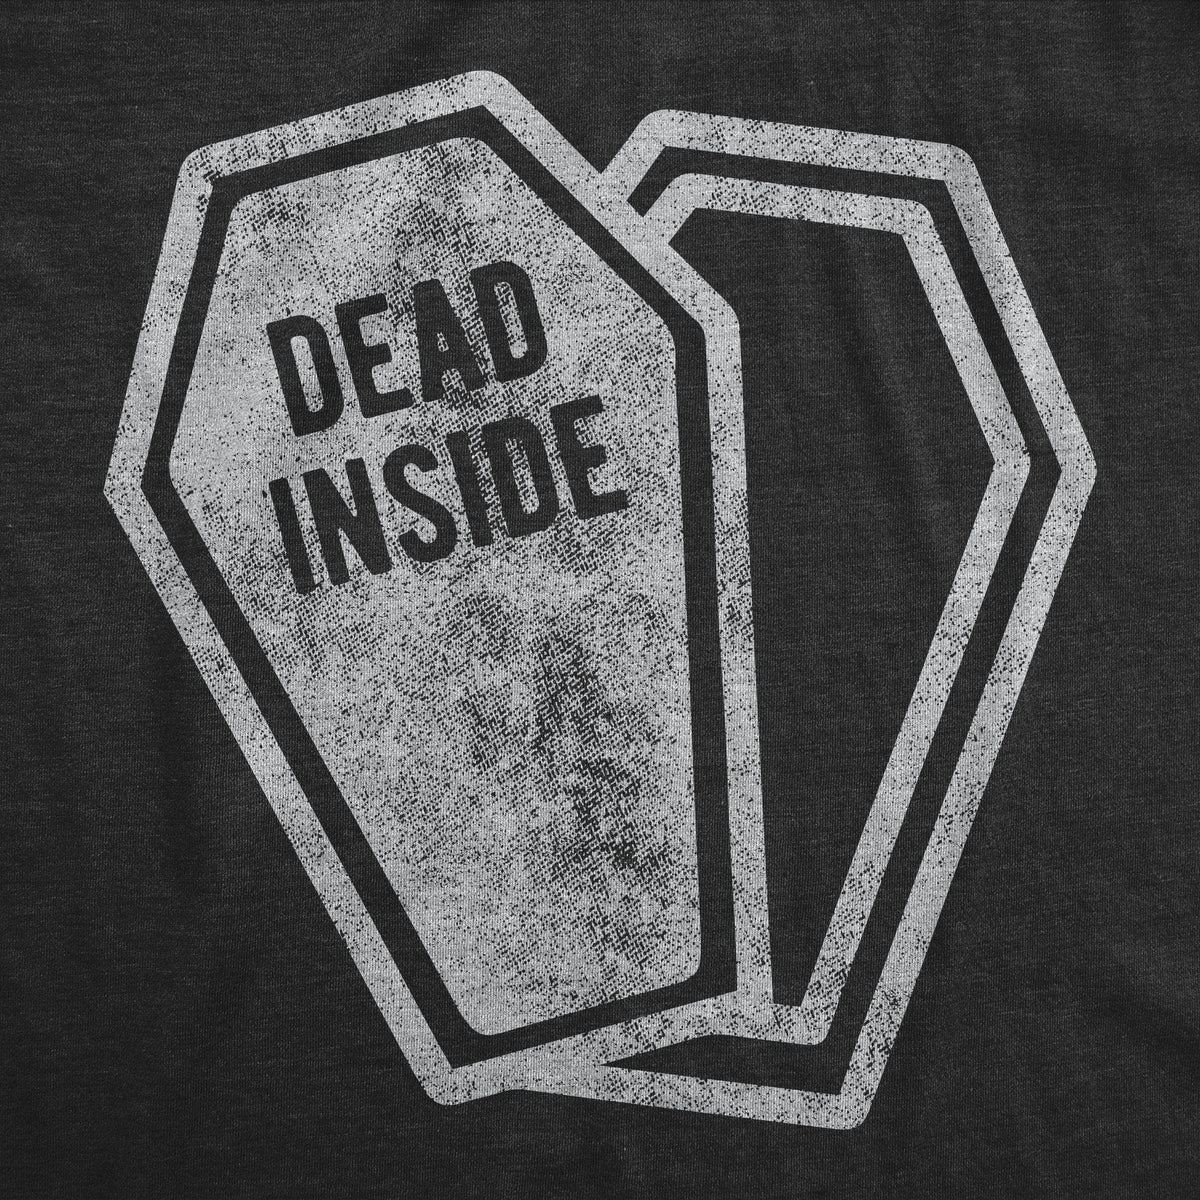 Dead Inside Men&#39;s Tshirt - Crazy Dog T-Shirts